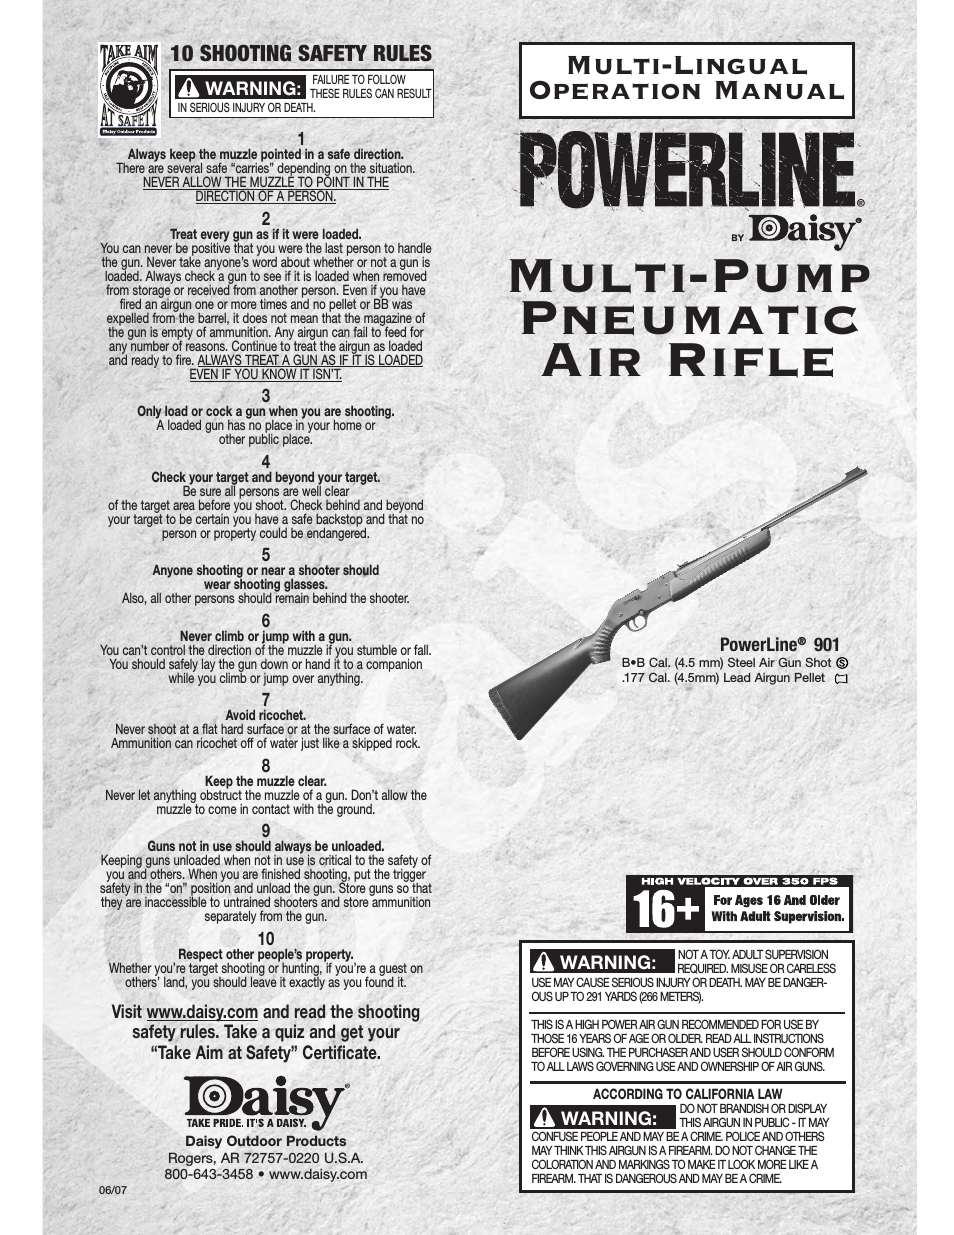 PowerLine 901